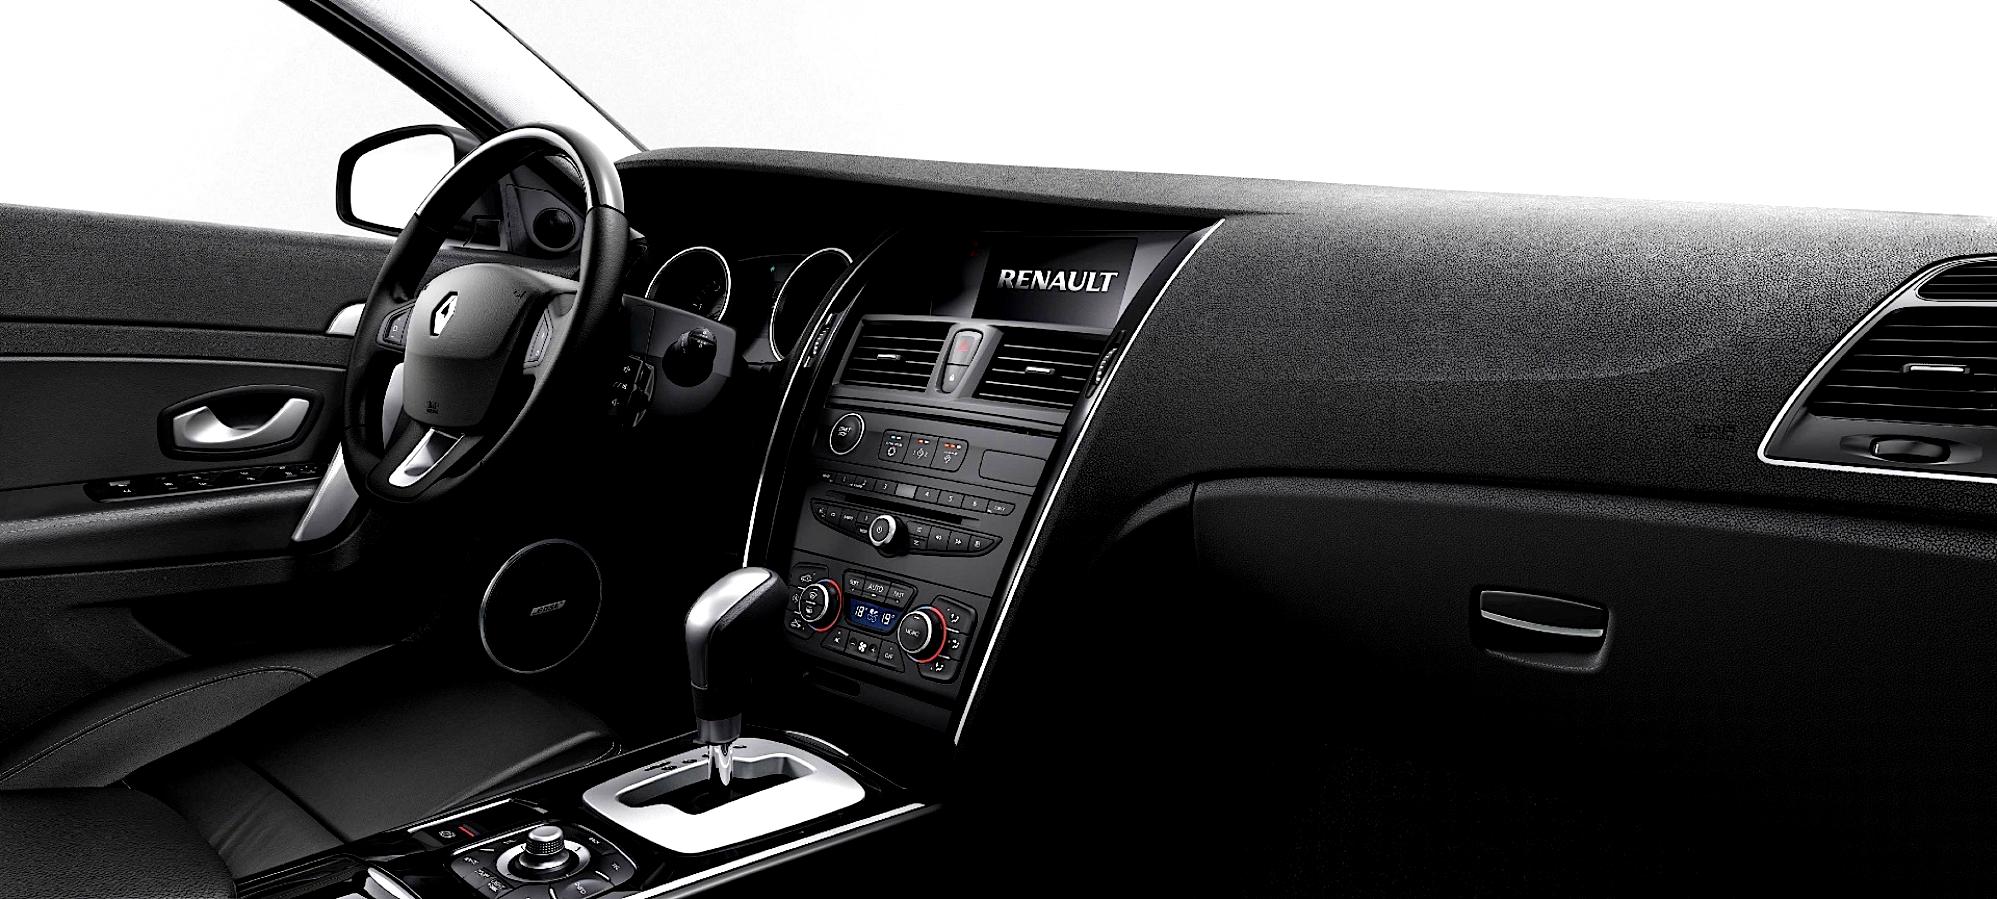 Renault Latitude 2010 #59